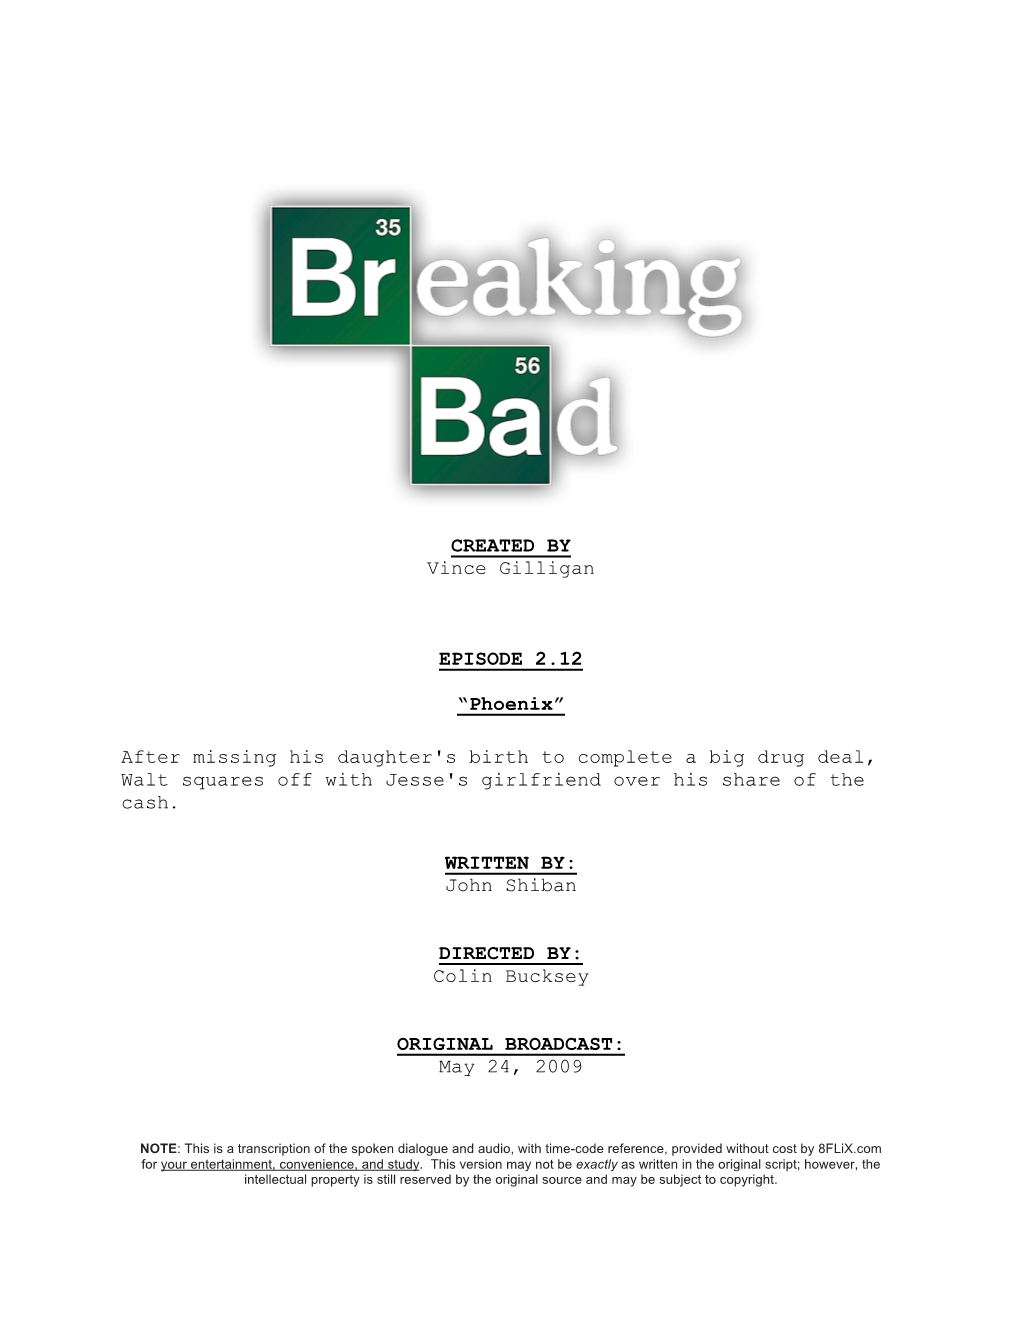 Breaking Bad | Dialogue Transcript | S2:E12